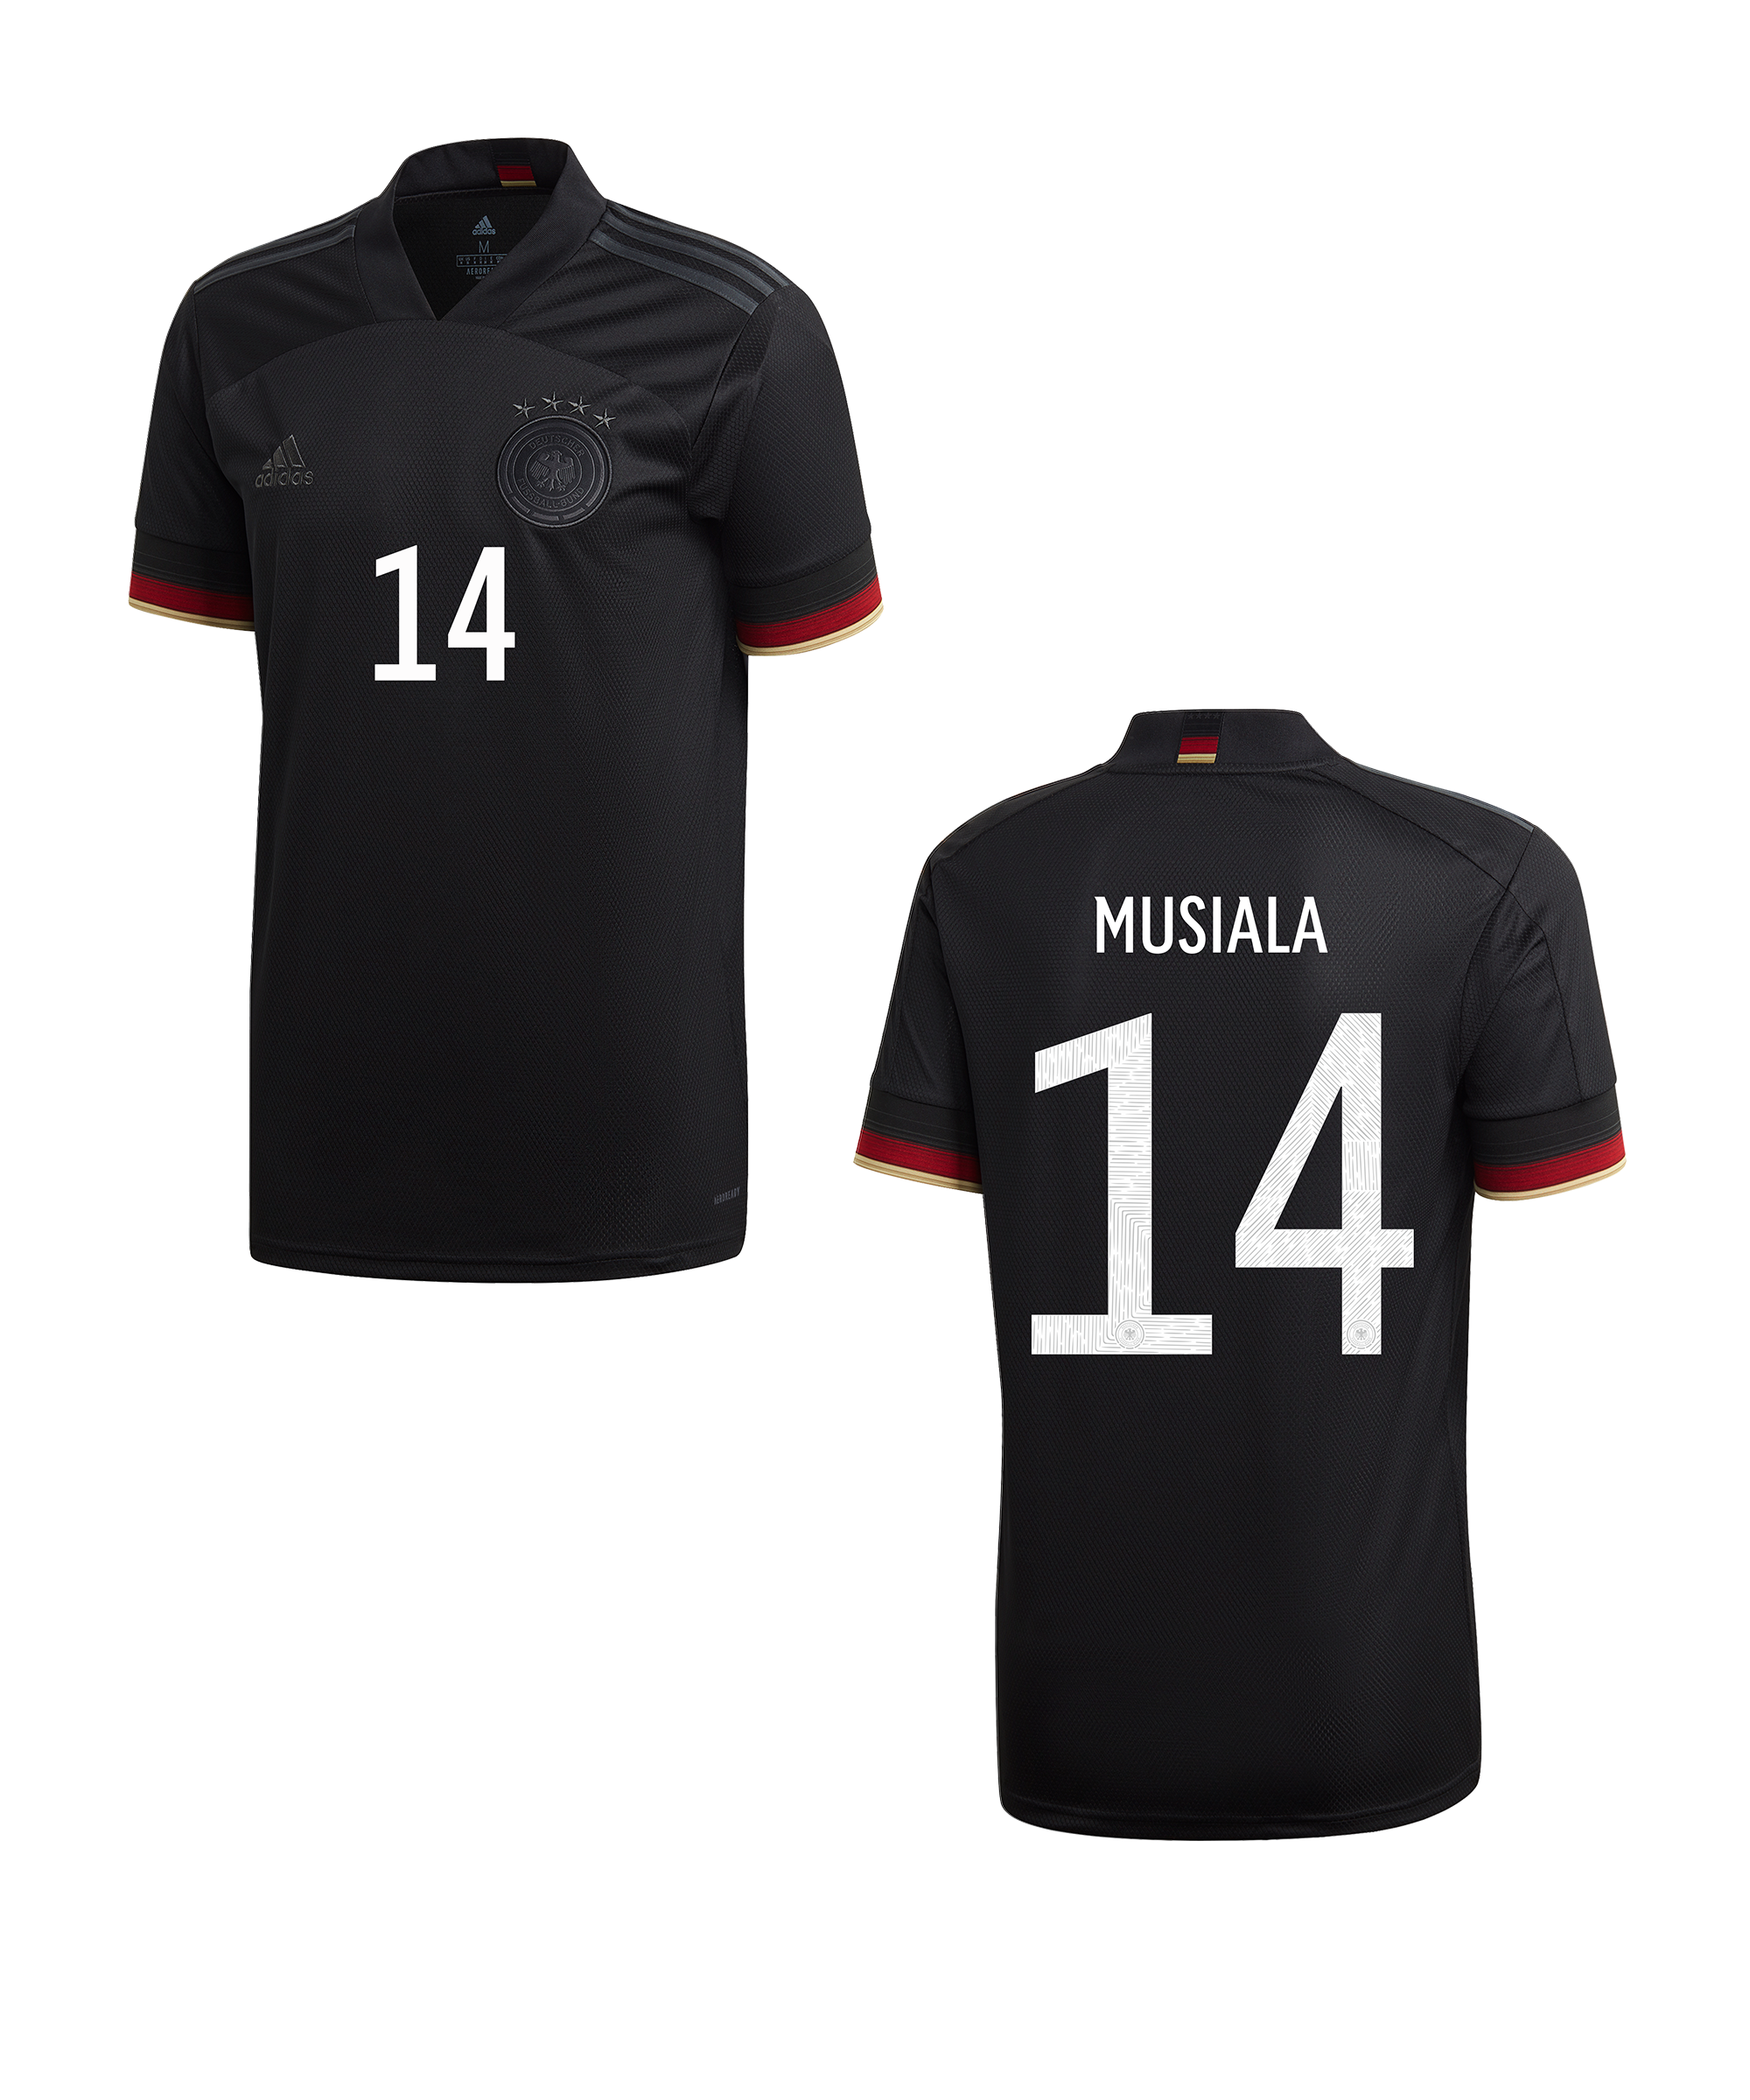 Bluza adidas DFB Deutschland t Away EM2020 Musiala